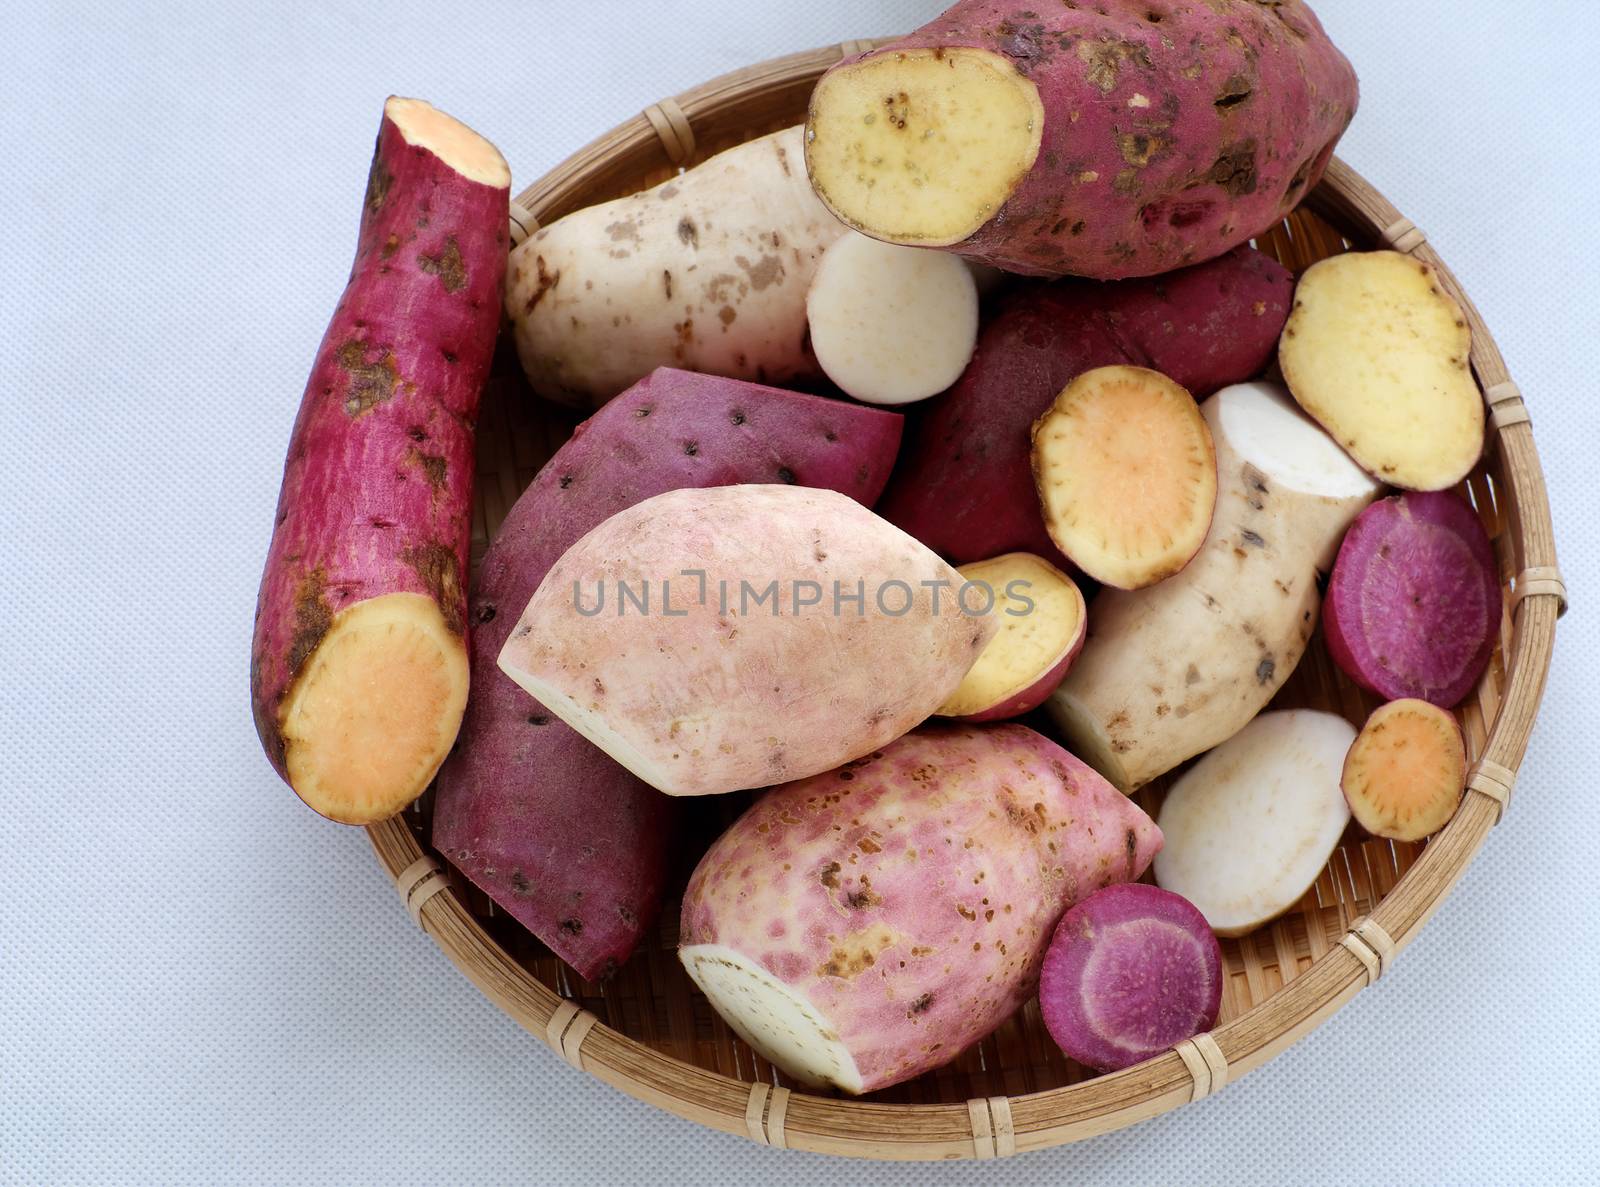 Diversity sweet potato on white background by xuanhuongho